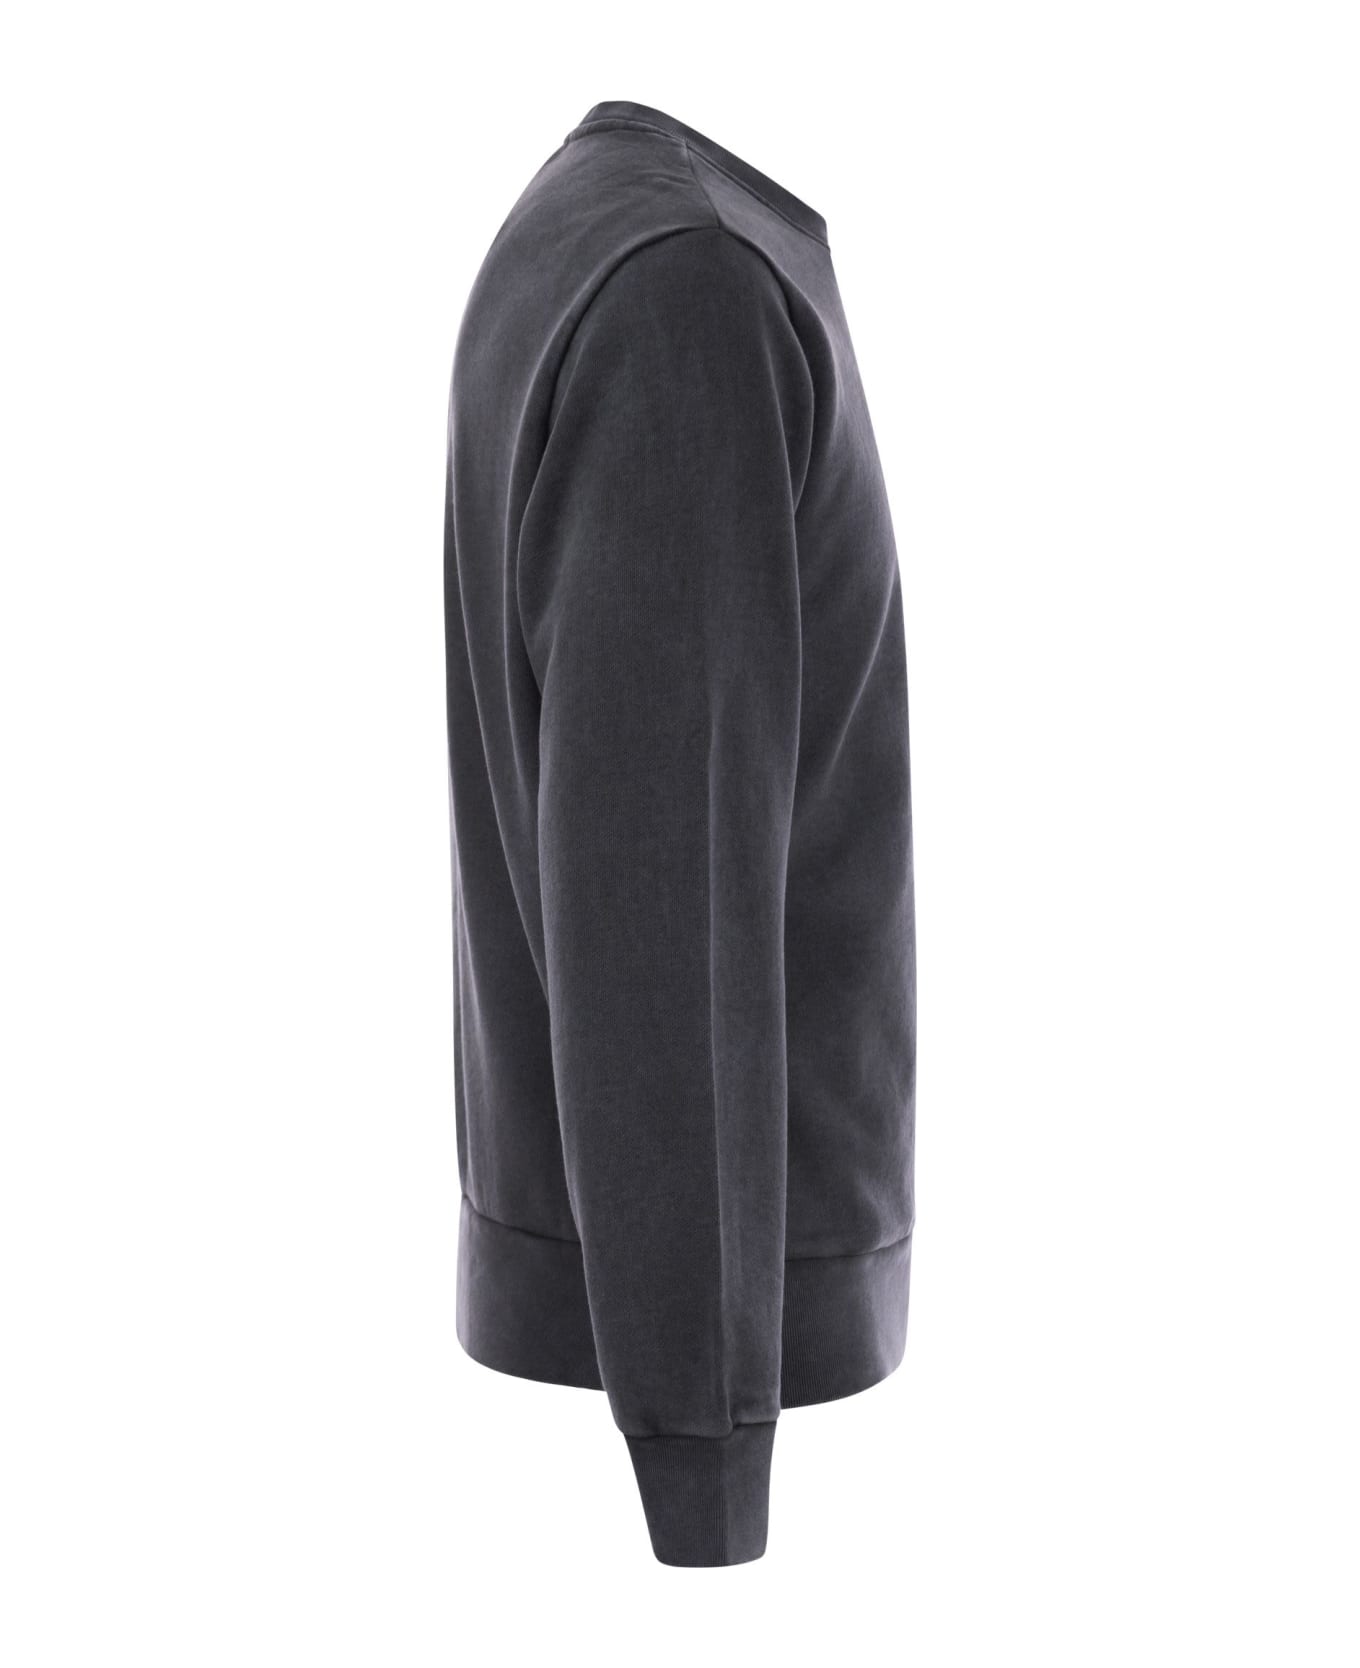 Polo Ralph Lauren Cotton Loopback Sweatshirt - Black